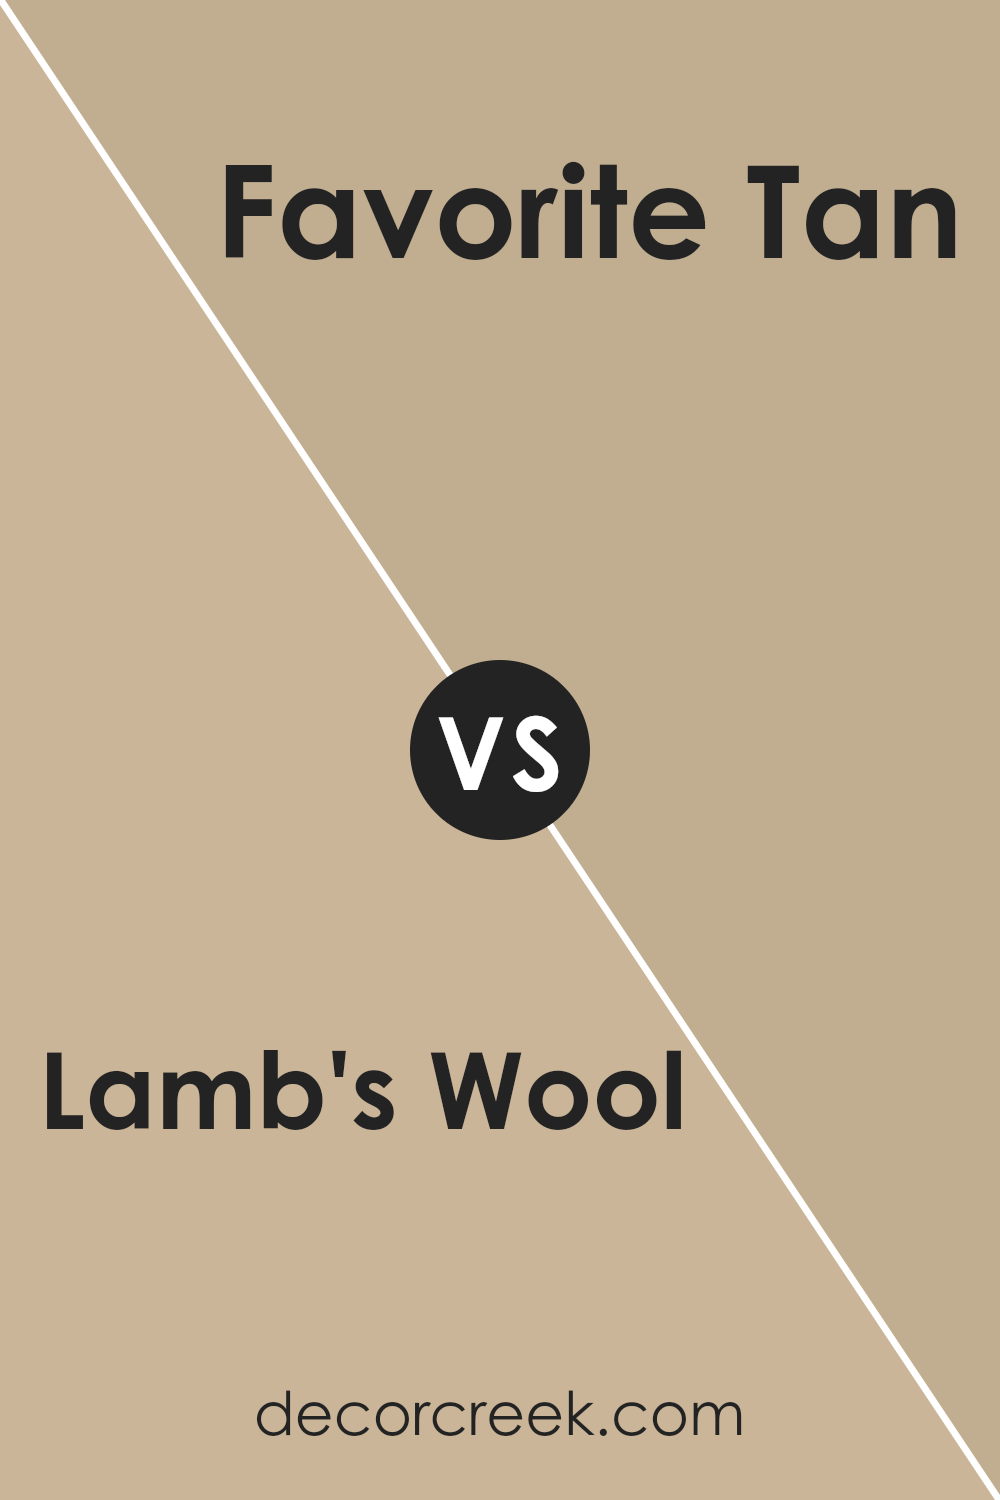 lambs_wool_sw_9536_vs_favorite_tan_sw_6157